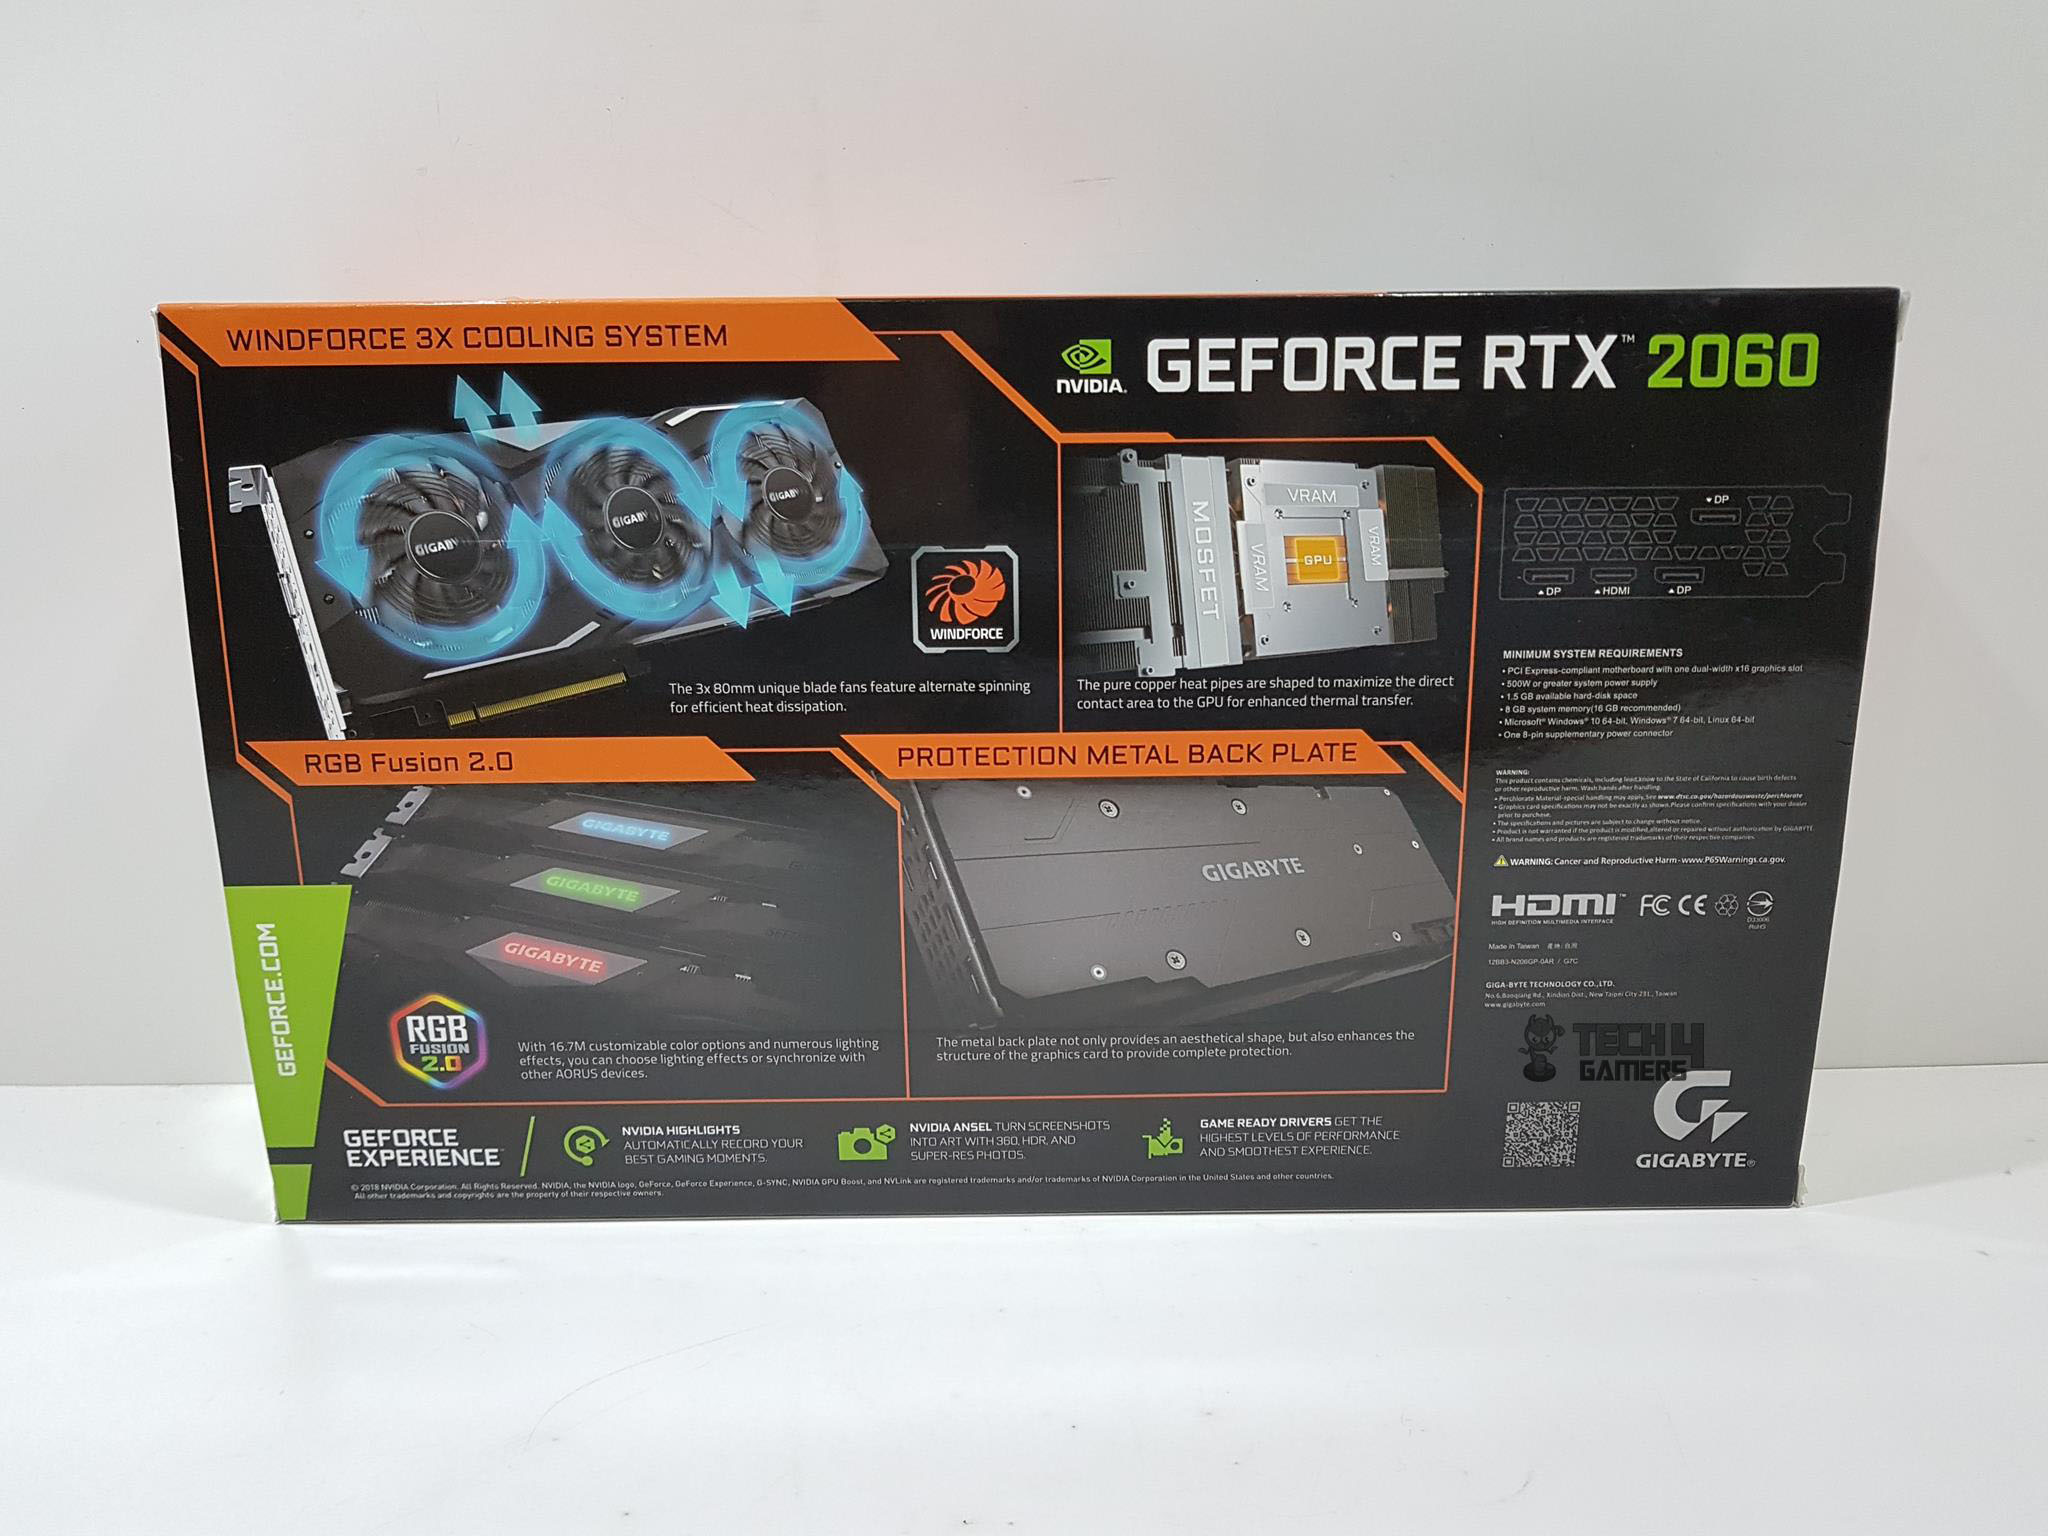 Gigabyte GeForce RTX 2060 Gaming Pro OC 6G — The backside of the box